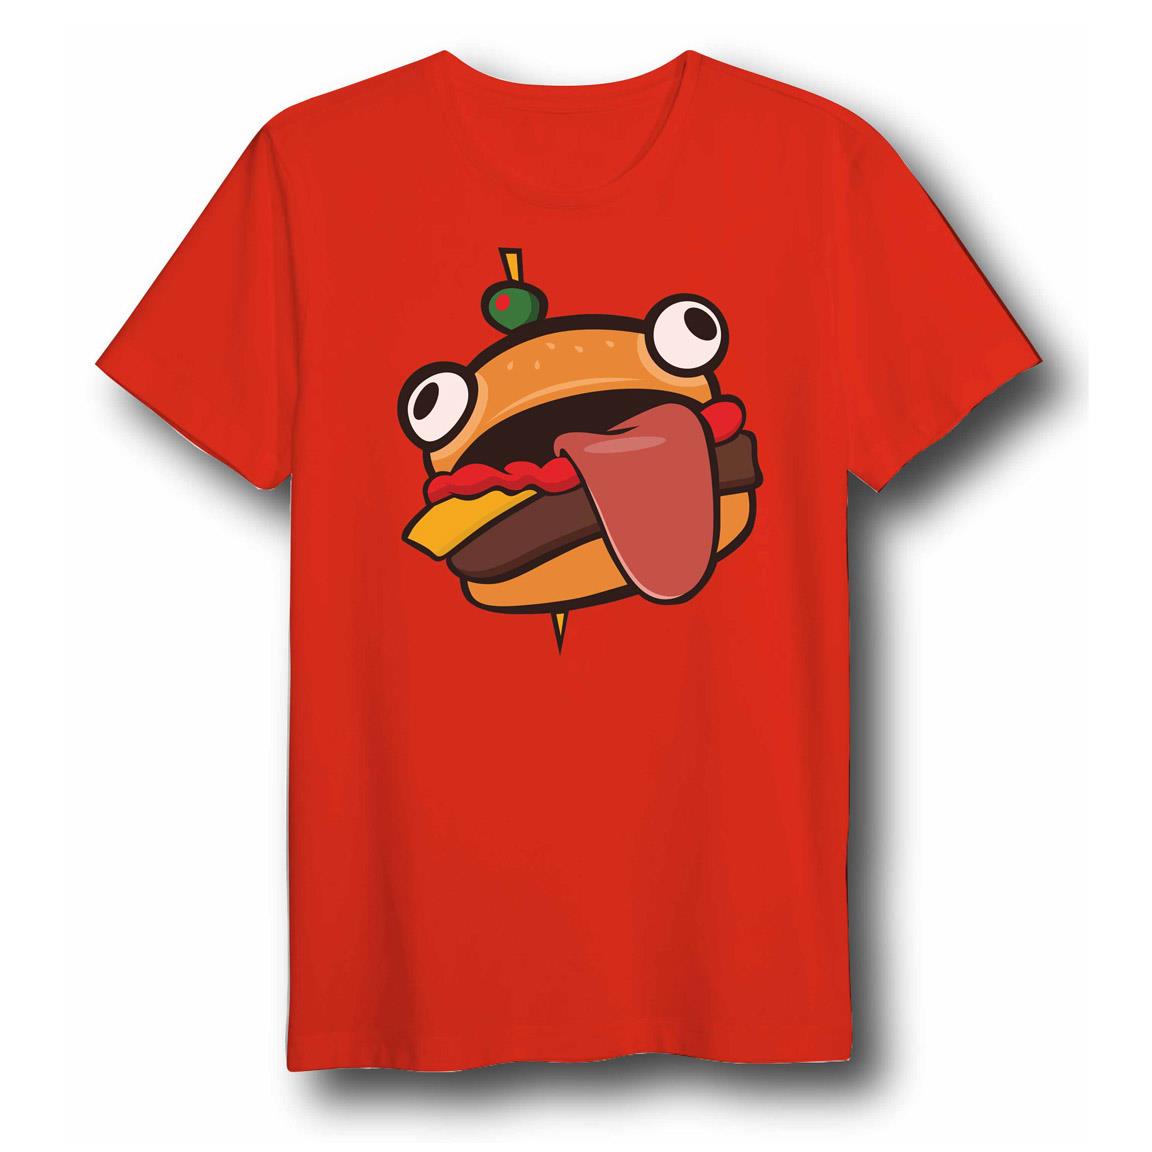 Fortnite - Red Durr Burger T-Shirt Kids 14Y